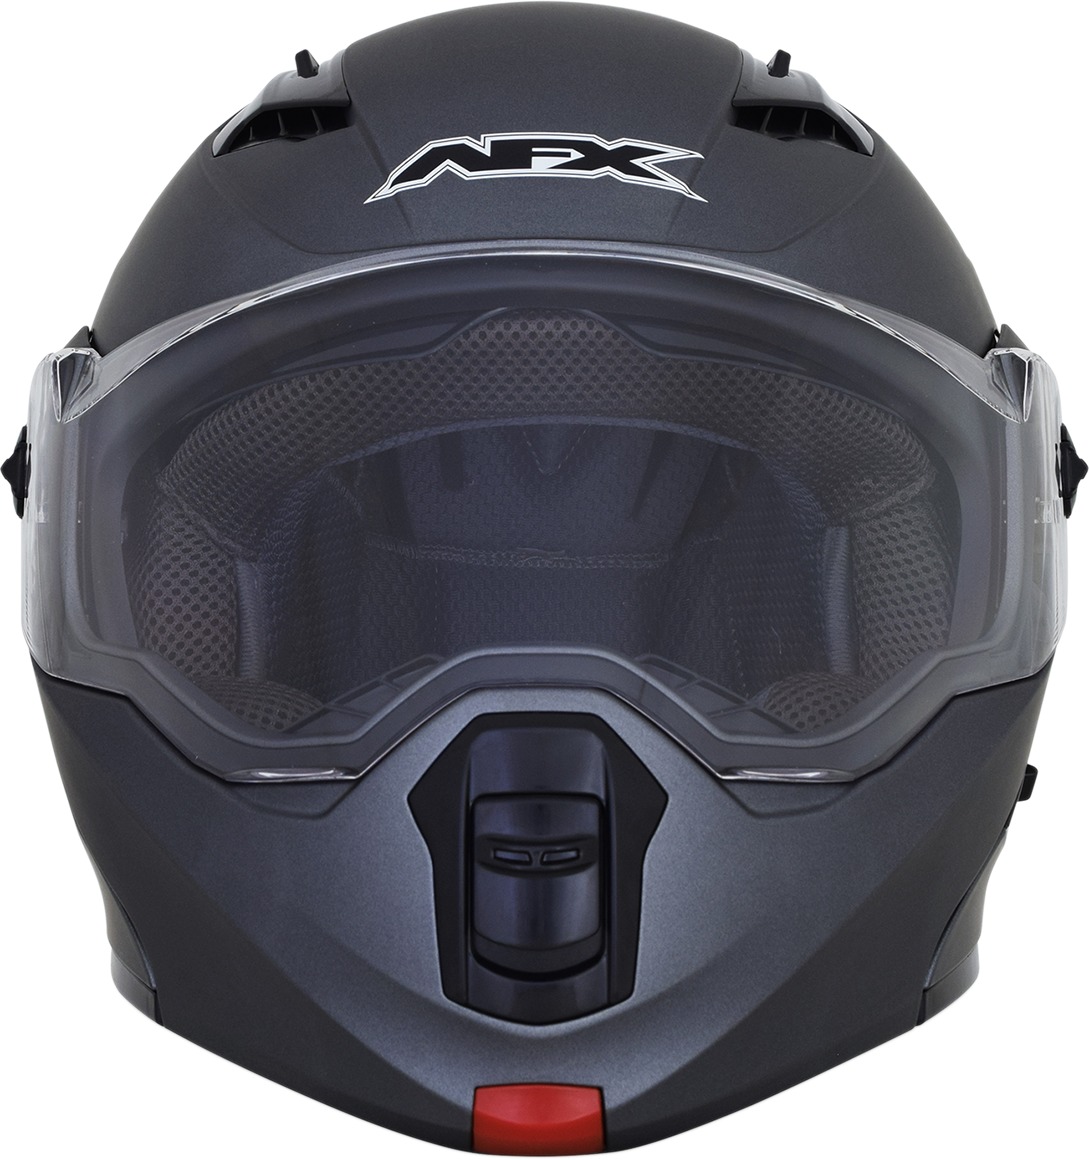 FX-111 Modular Street Helmet Gray Small - Click Image to Close